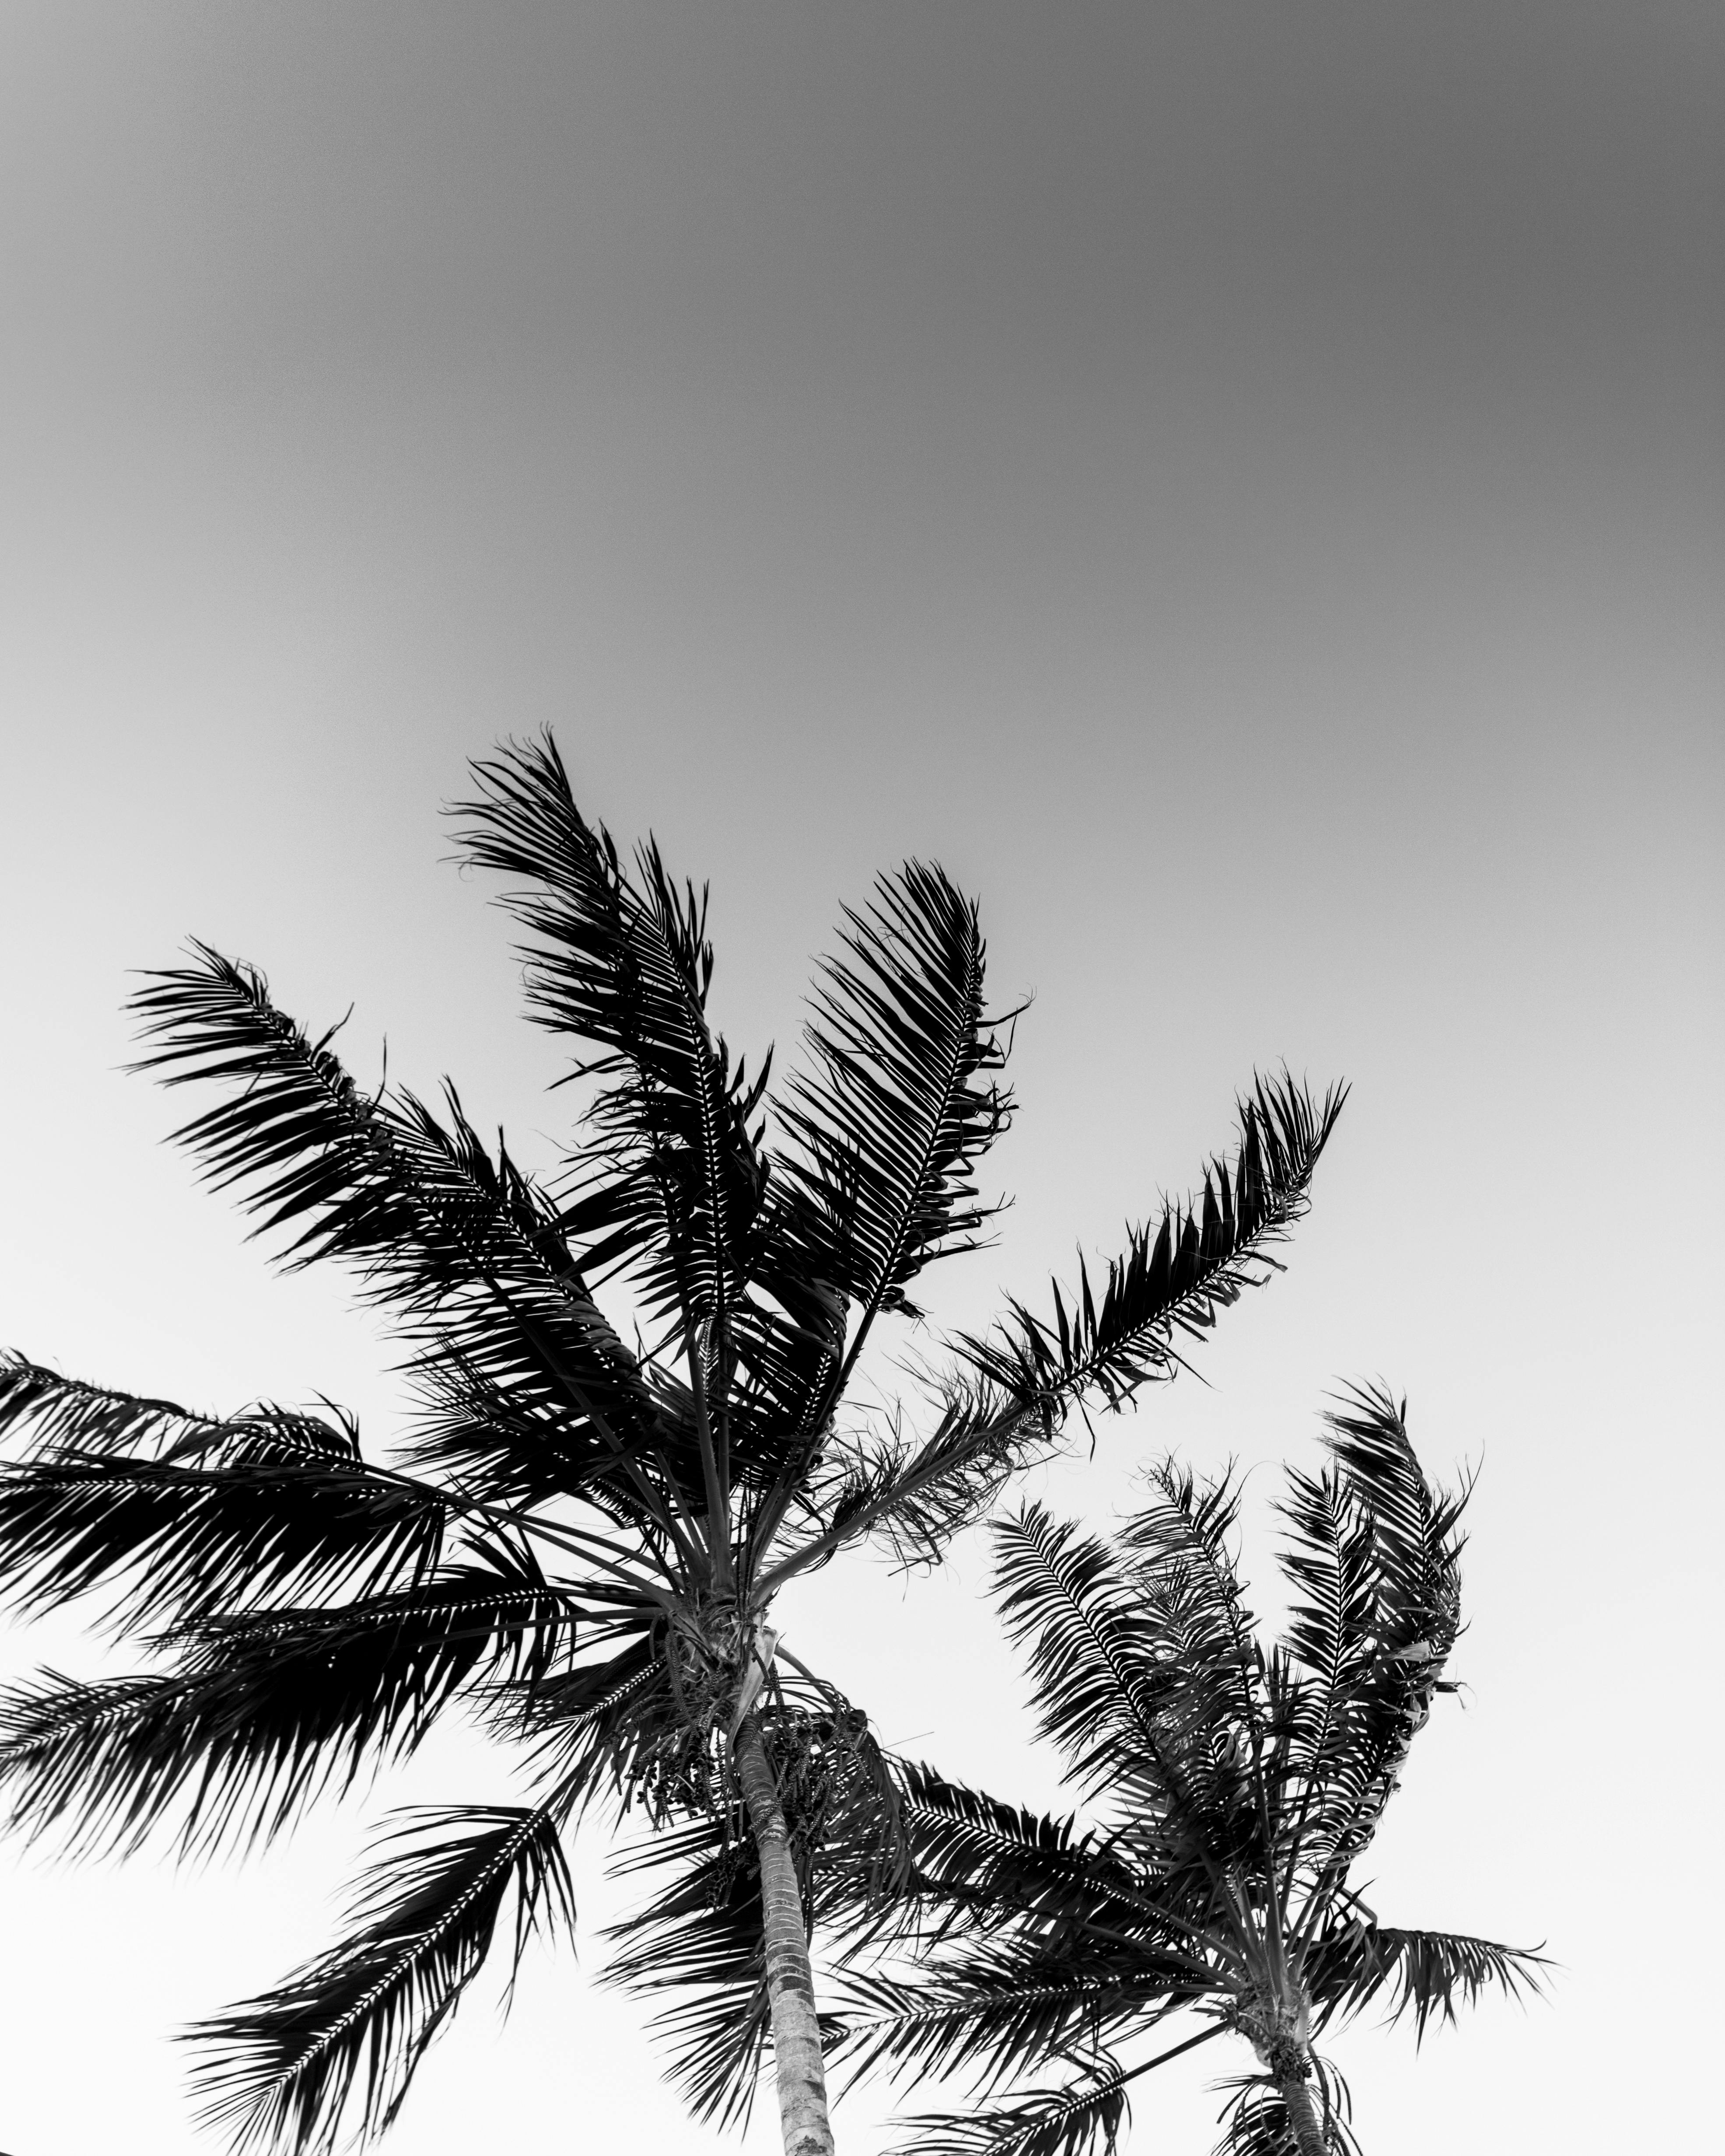 Monochrome Photo of Palm Trees · Free Stock Photo